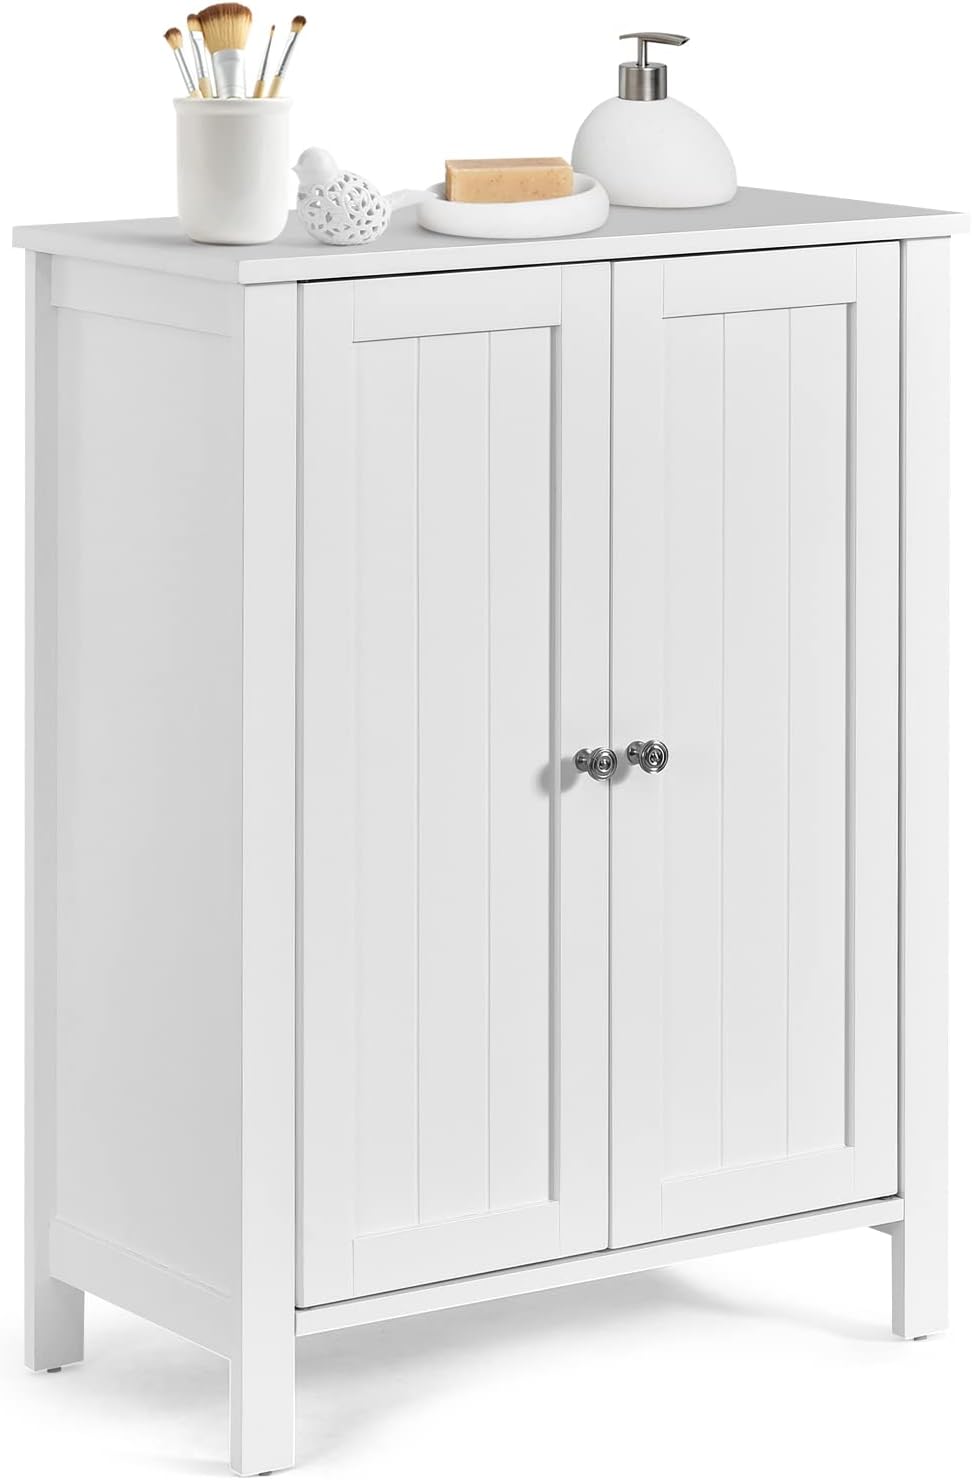 COSTWAY Bathroom Floor Cabinet - Freestanding Side Storage Organizer with Double Doors & Adjustable Shelf, Wooden Storage Cabinet for Living Room, Bedroom, Kitchen, Entryway (White)